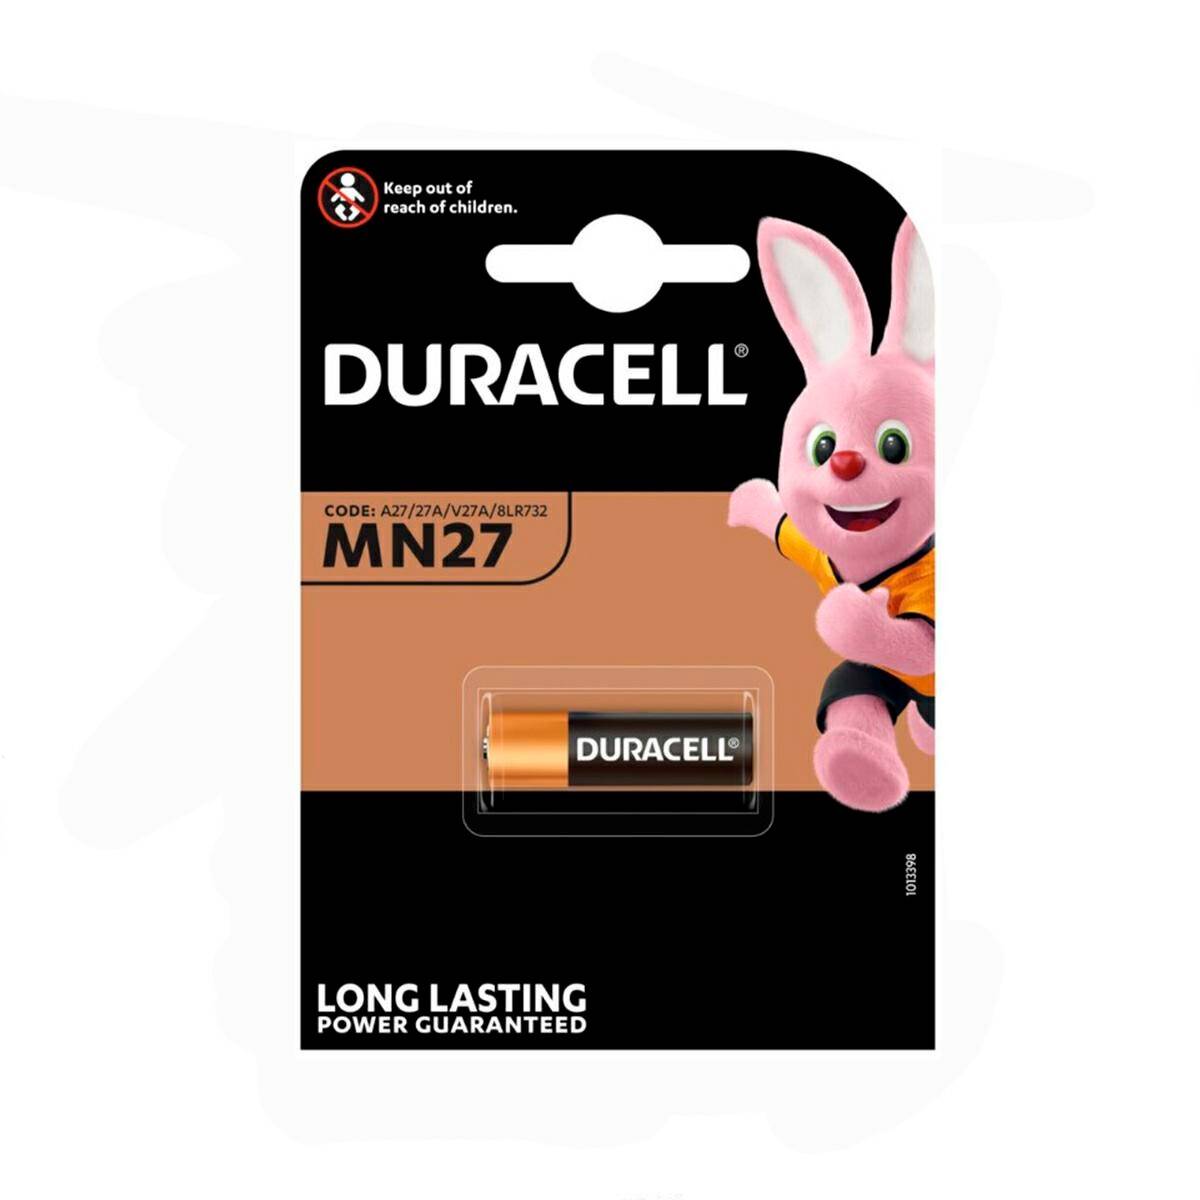 Bateria Duracell MN27 8LR732 12V 1 szt.